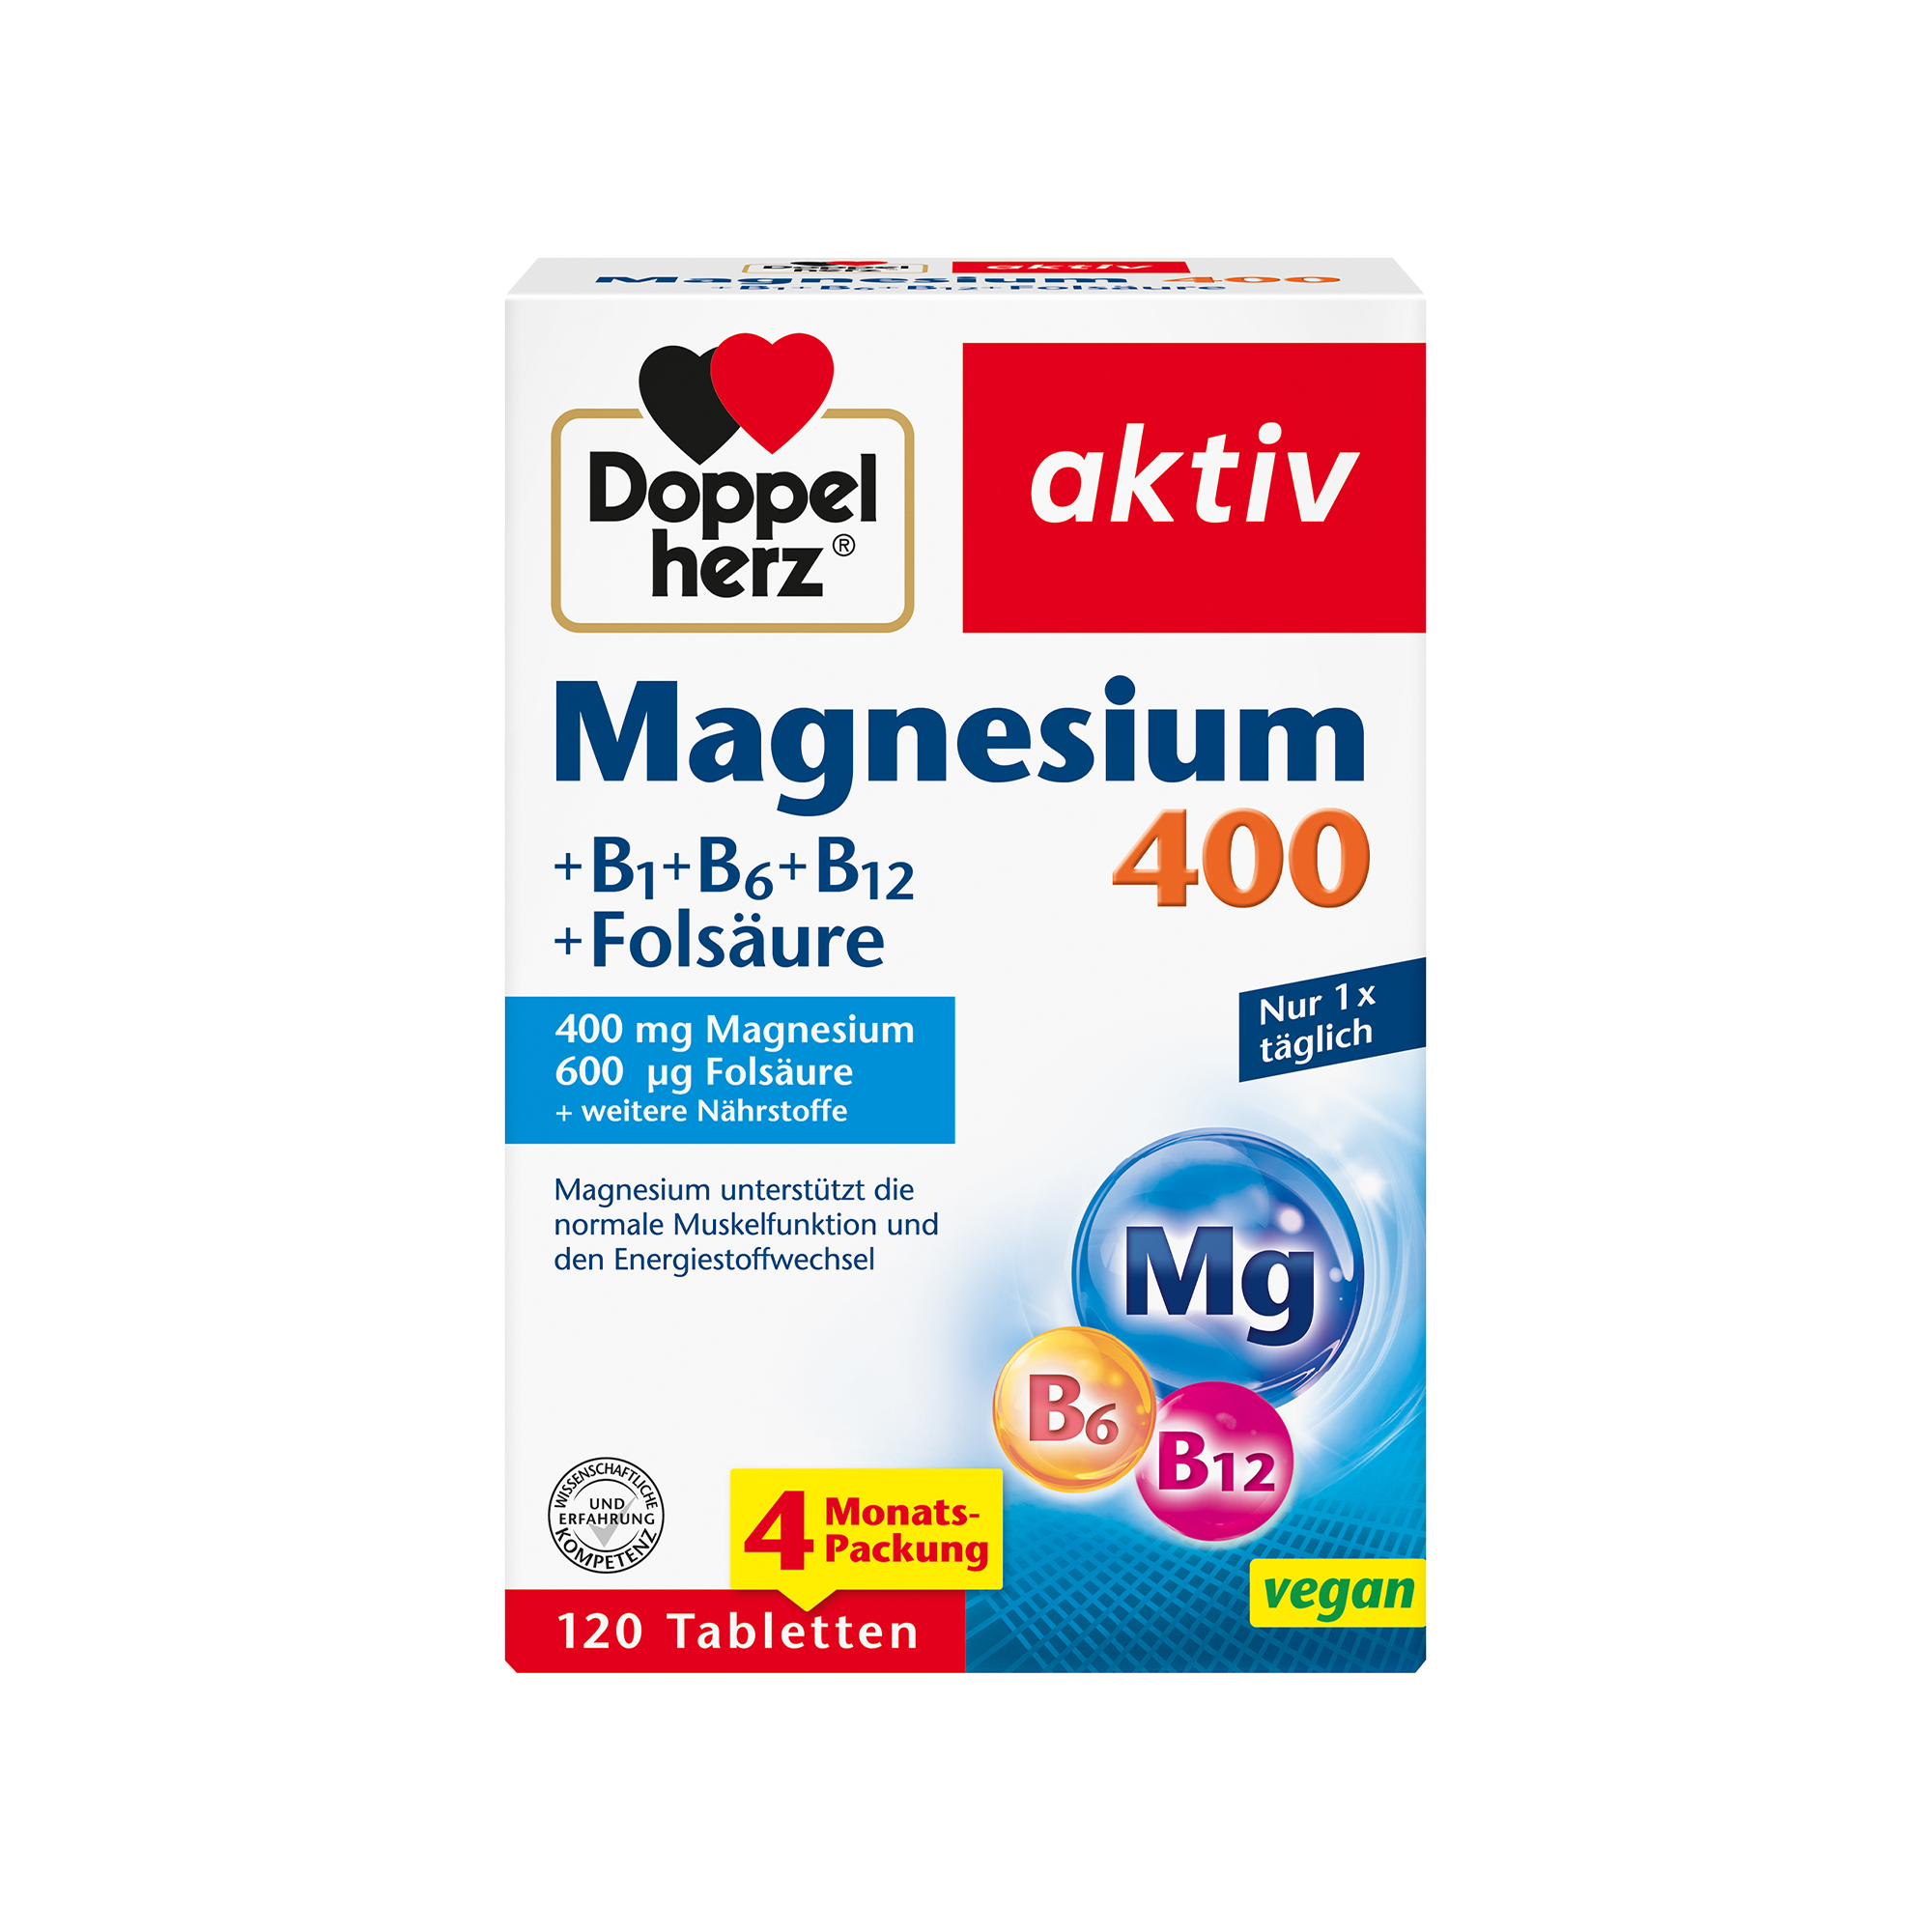 Doppelherz aktiv Magnesium 400, B+Folic Acid, 120 Tablets